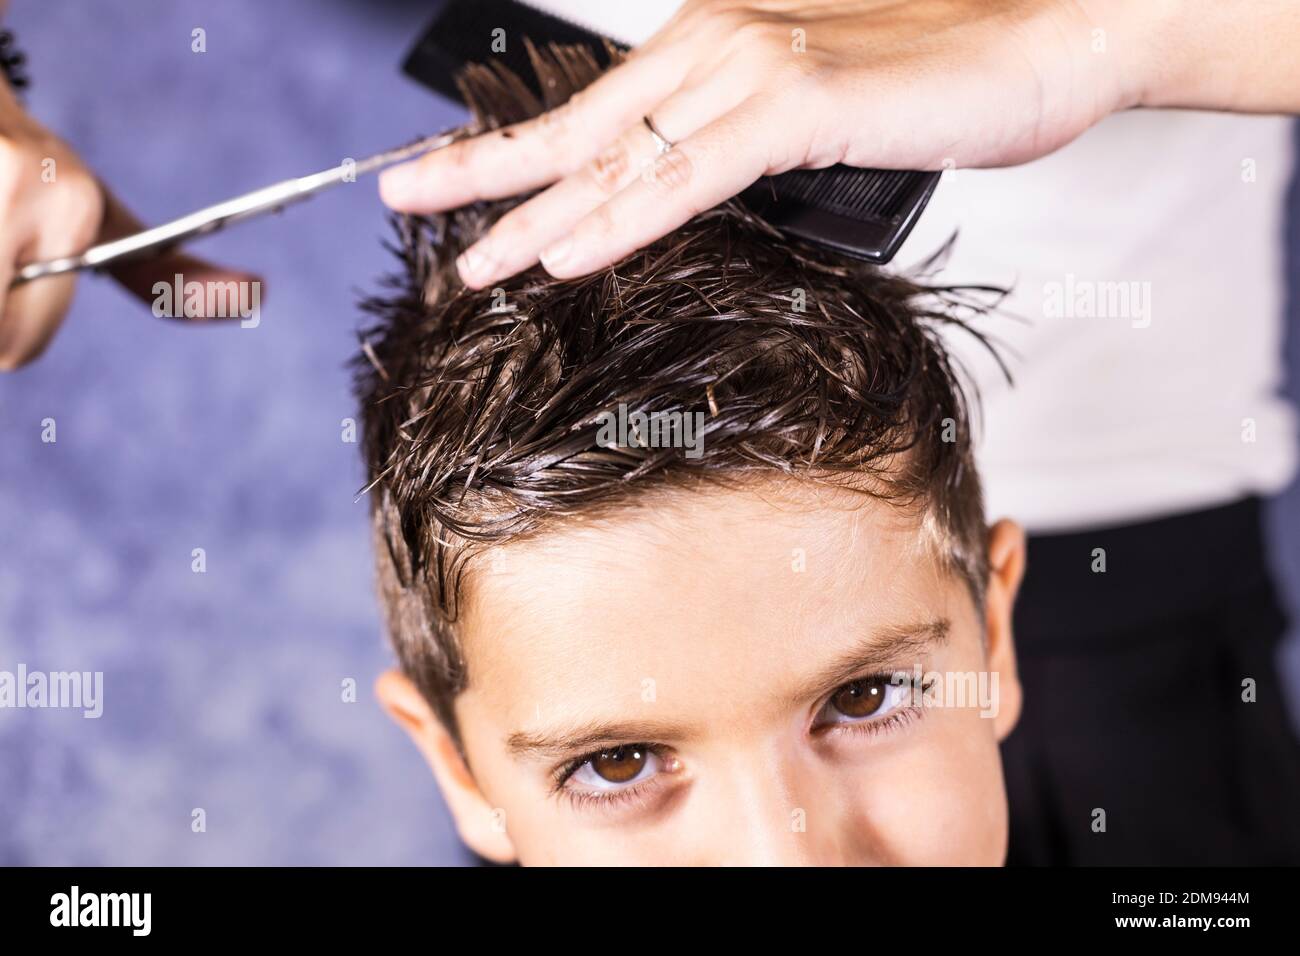 Woman Cutting Hair Against Wall Stock Photo - Alamy